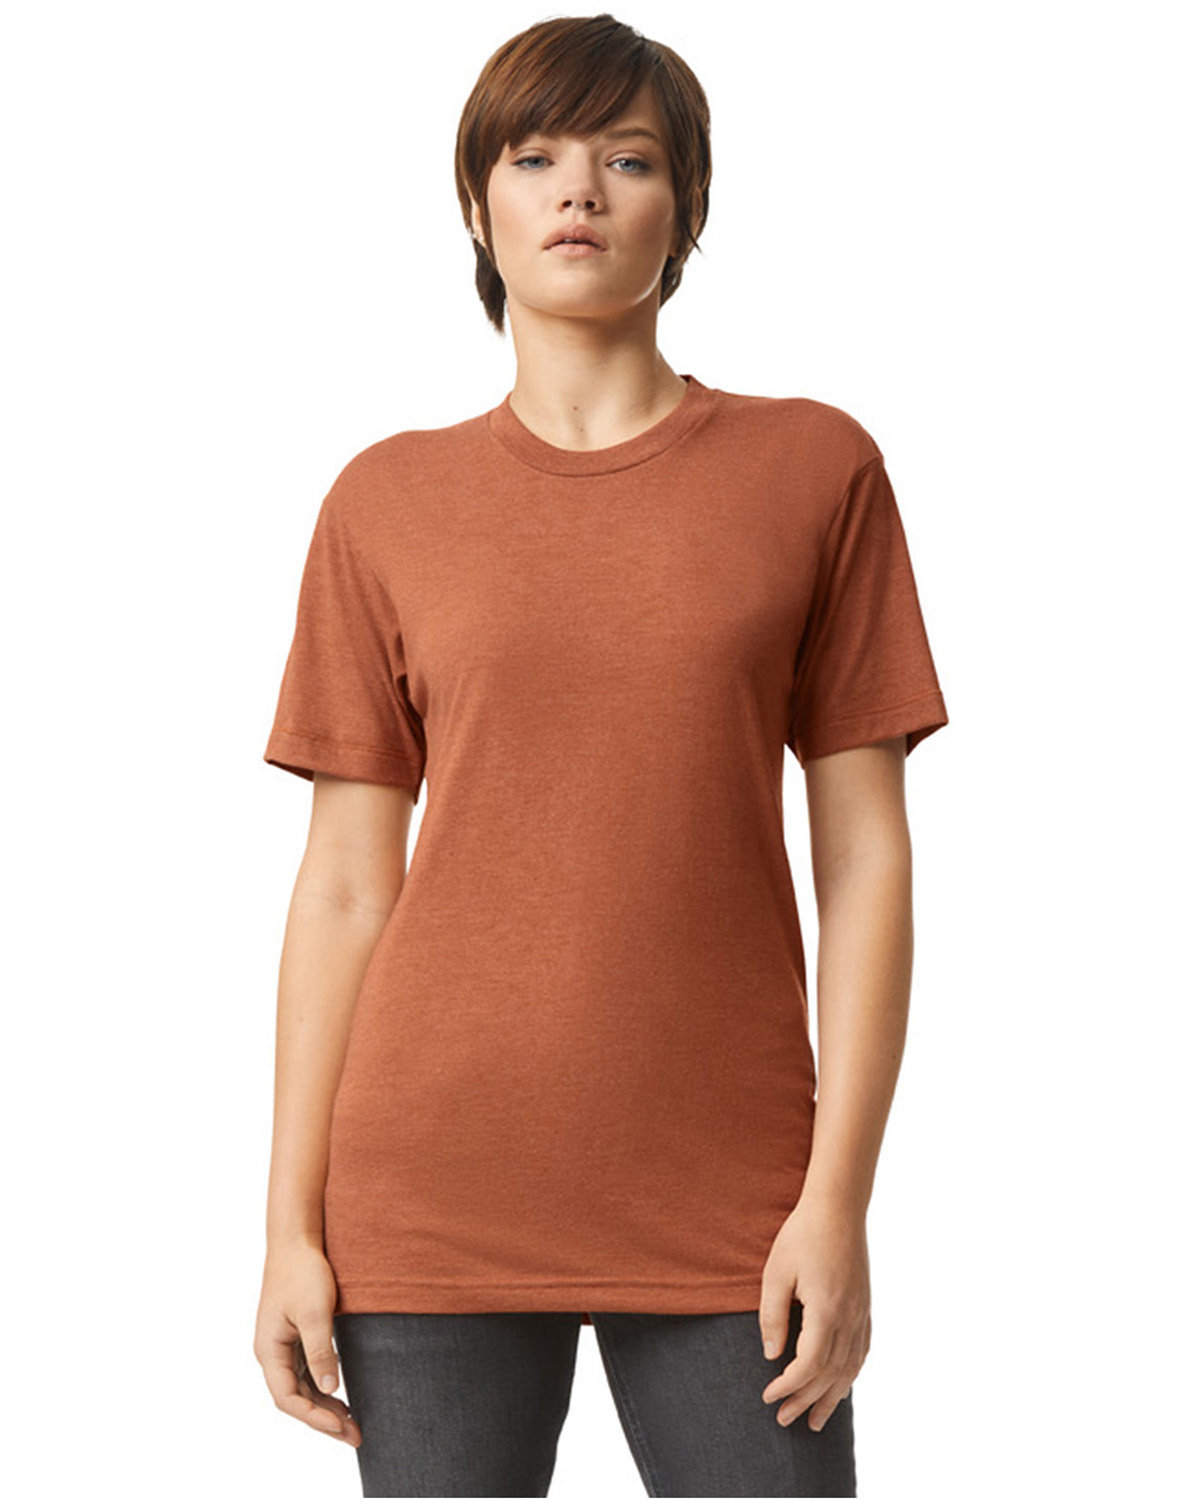 American Apparel Unisex Triblend Short-Sleeve Track T-Shirt tri rust 